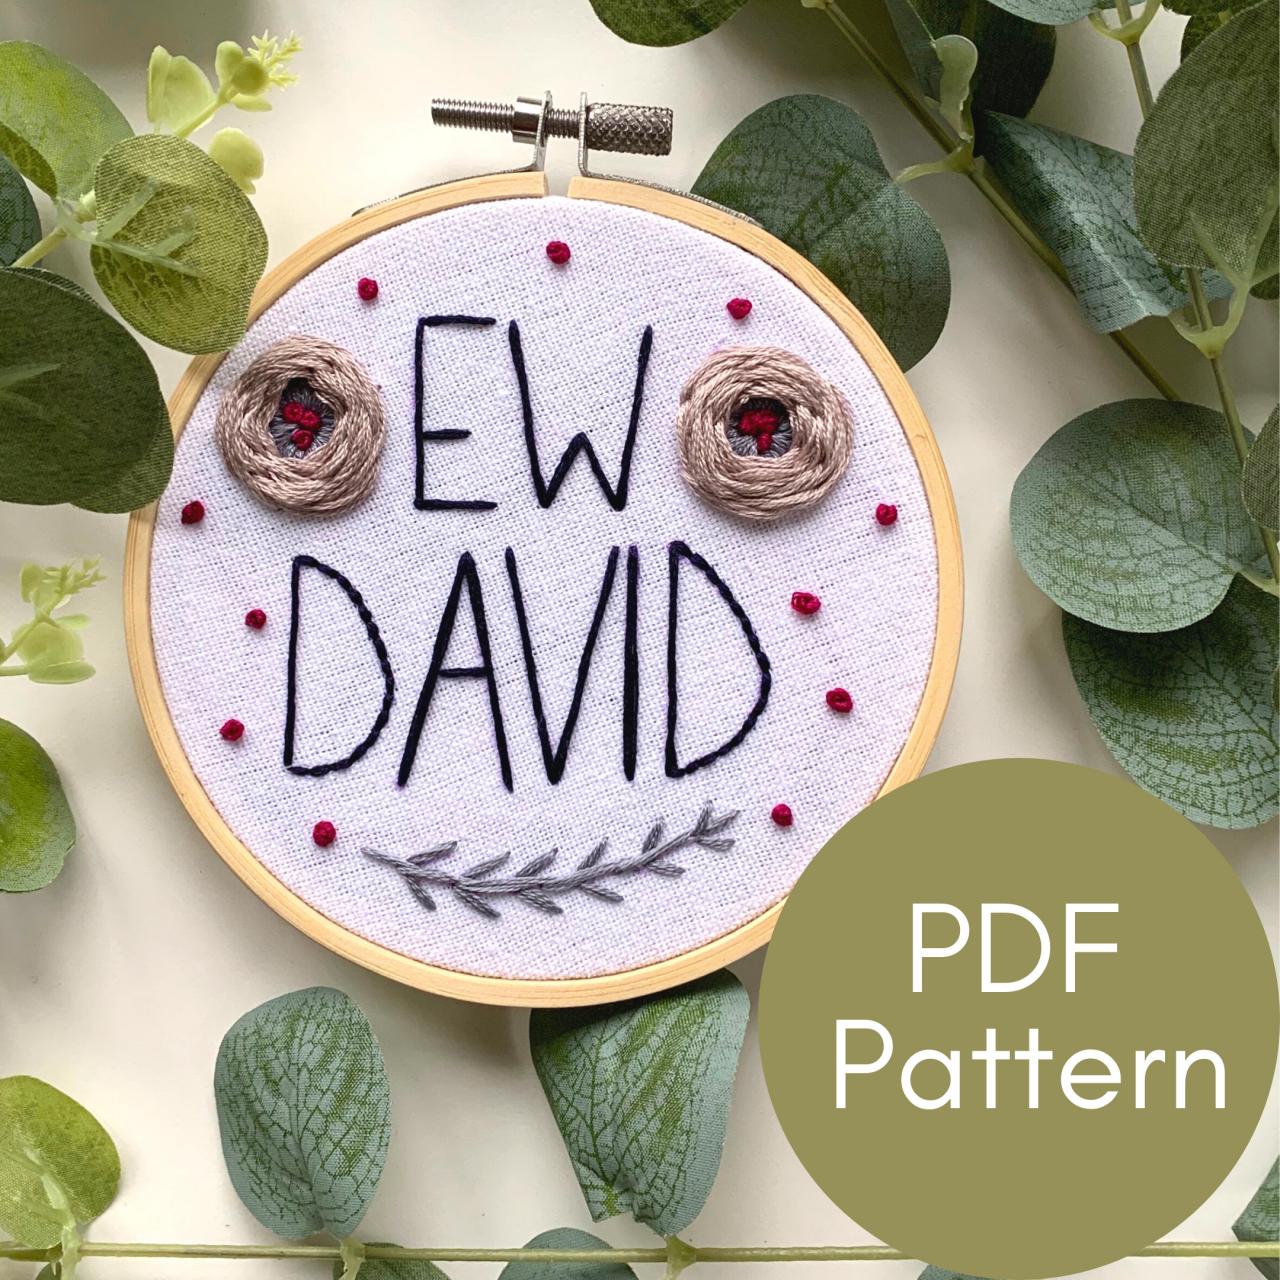 Ew David Hand Embroidery Pattern | Schitt's Creek Embroidery | Hand Embroidery | David Rose | Alexis Rose Quote | Fun Embroidery | DIY Art.